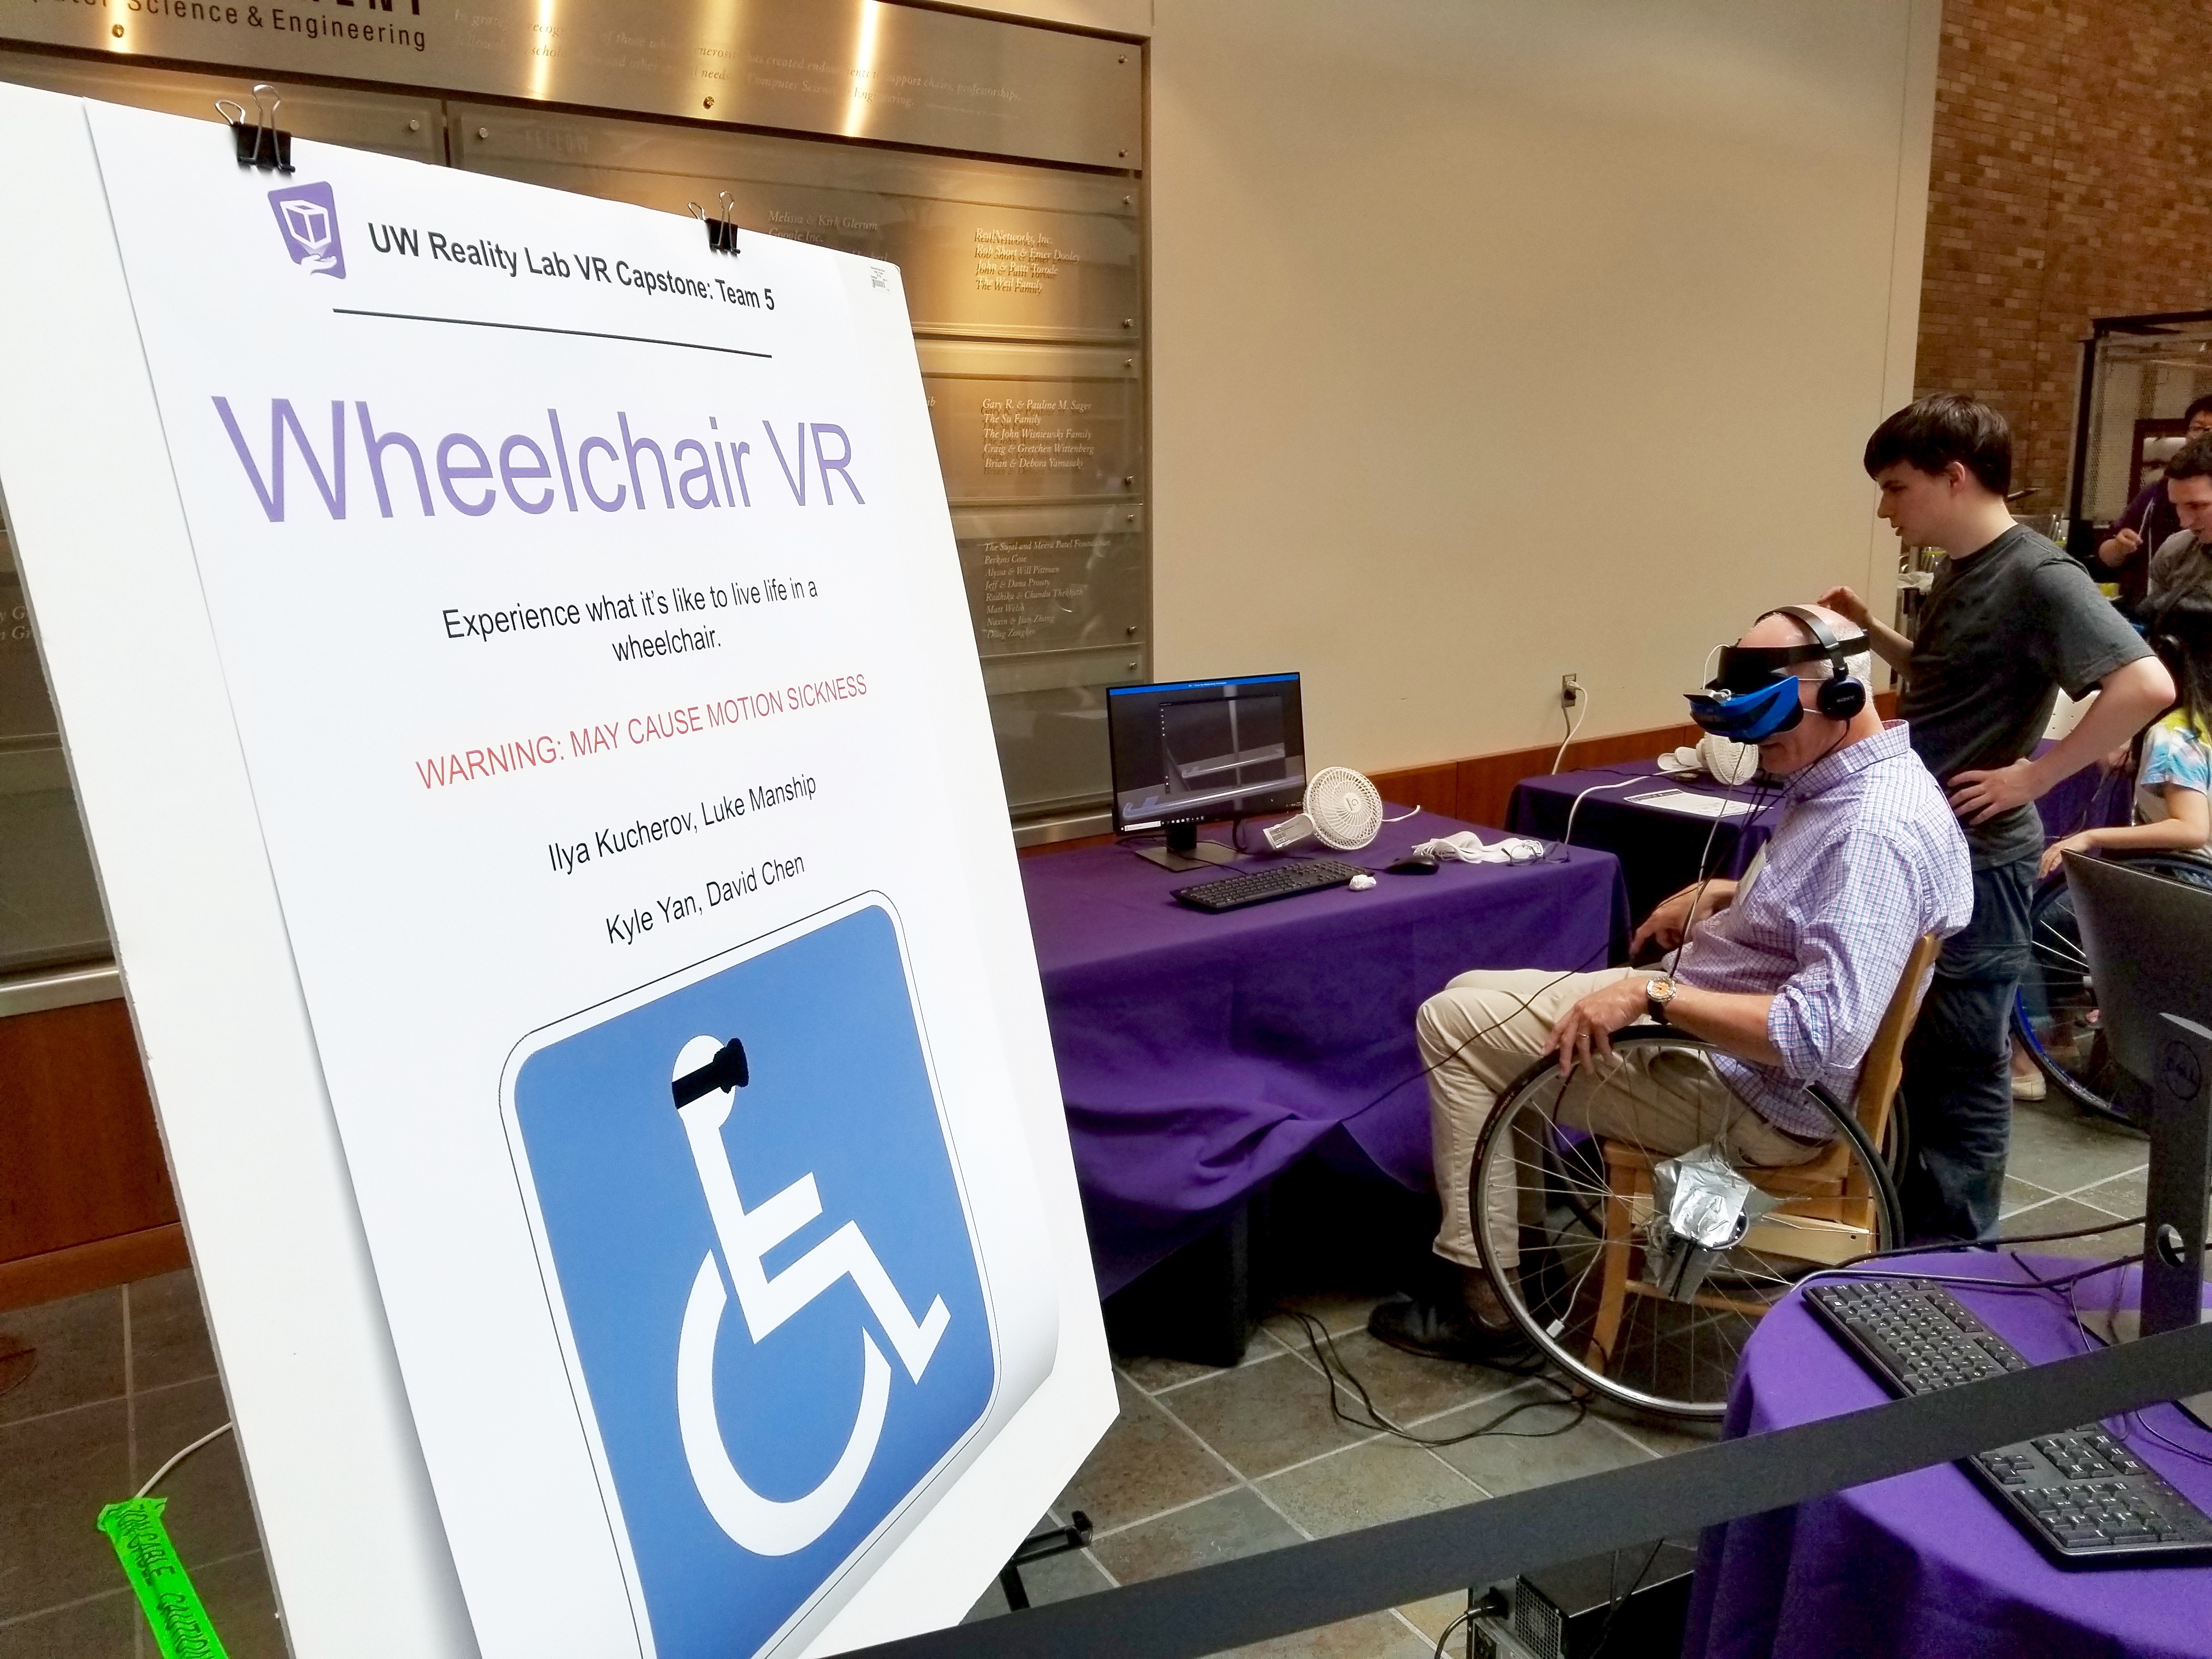 Wheelchair VR